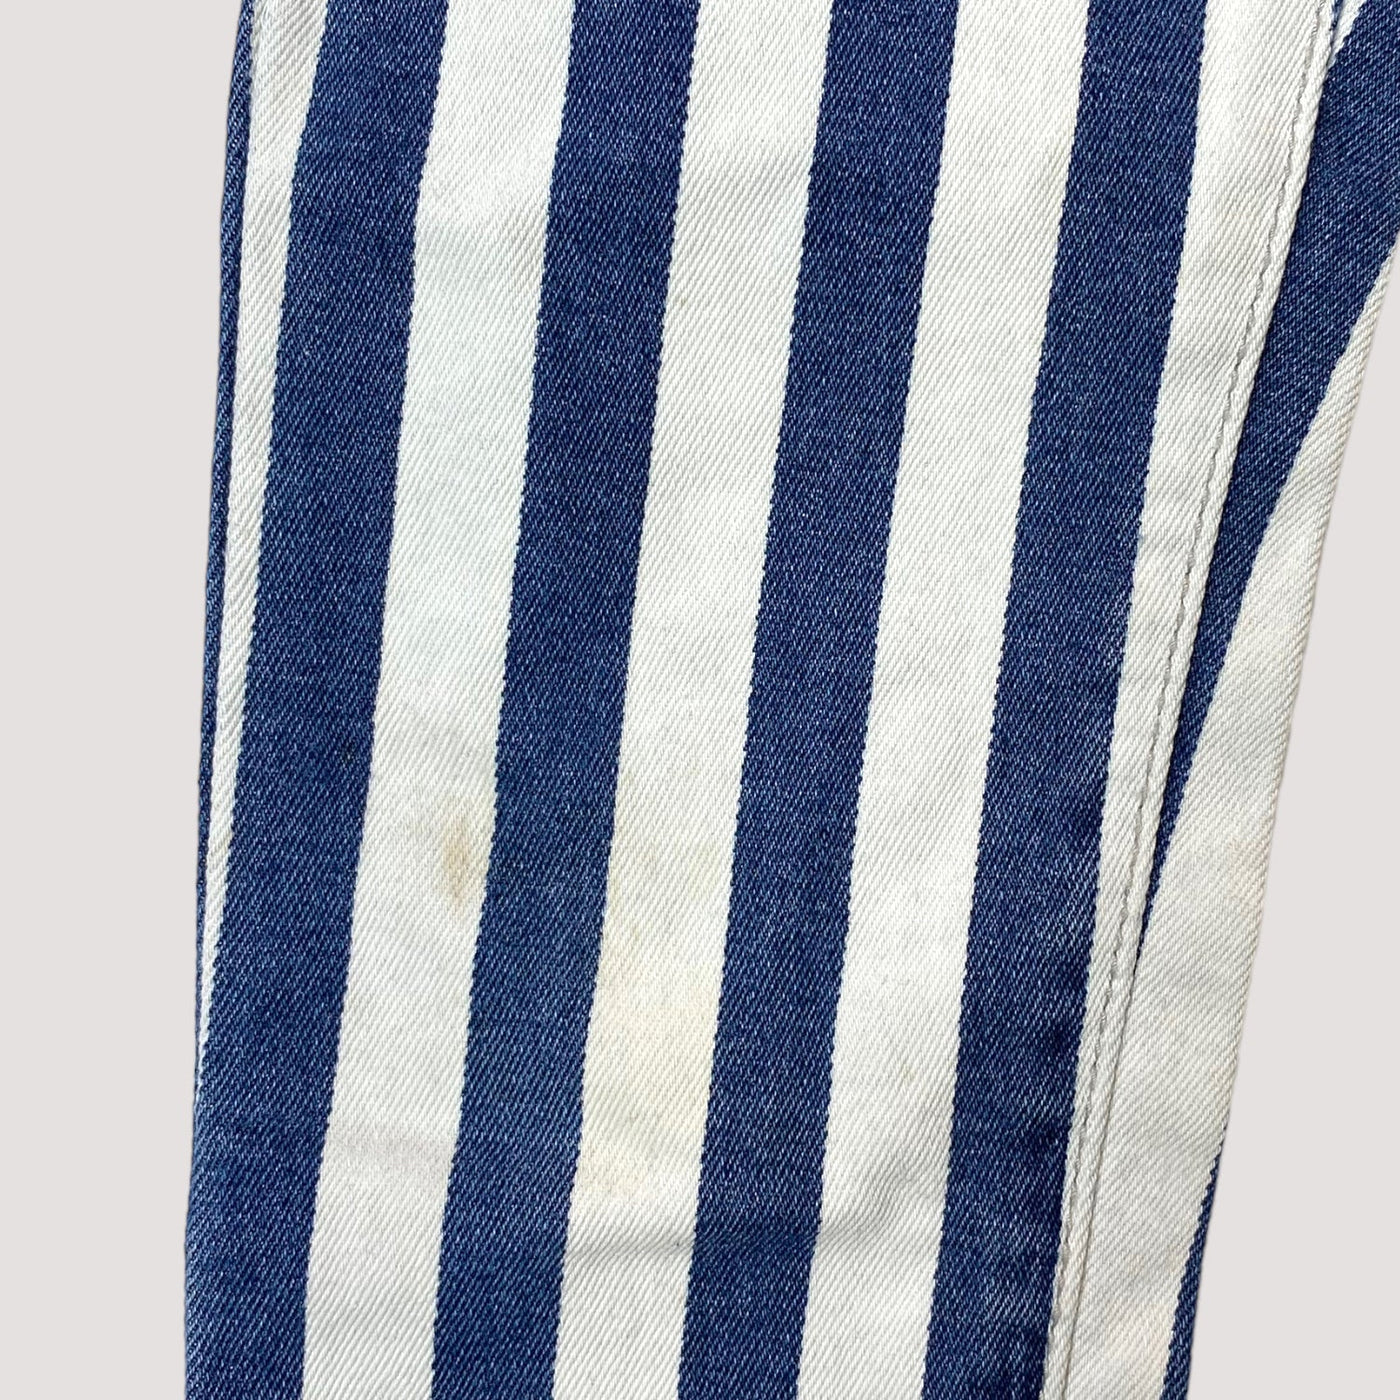 jeans leggings, indigo stripes | 110cm